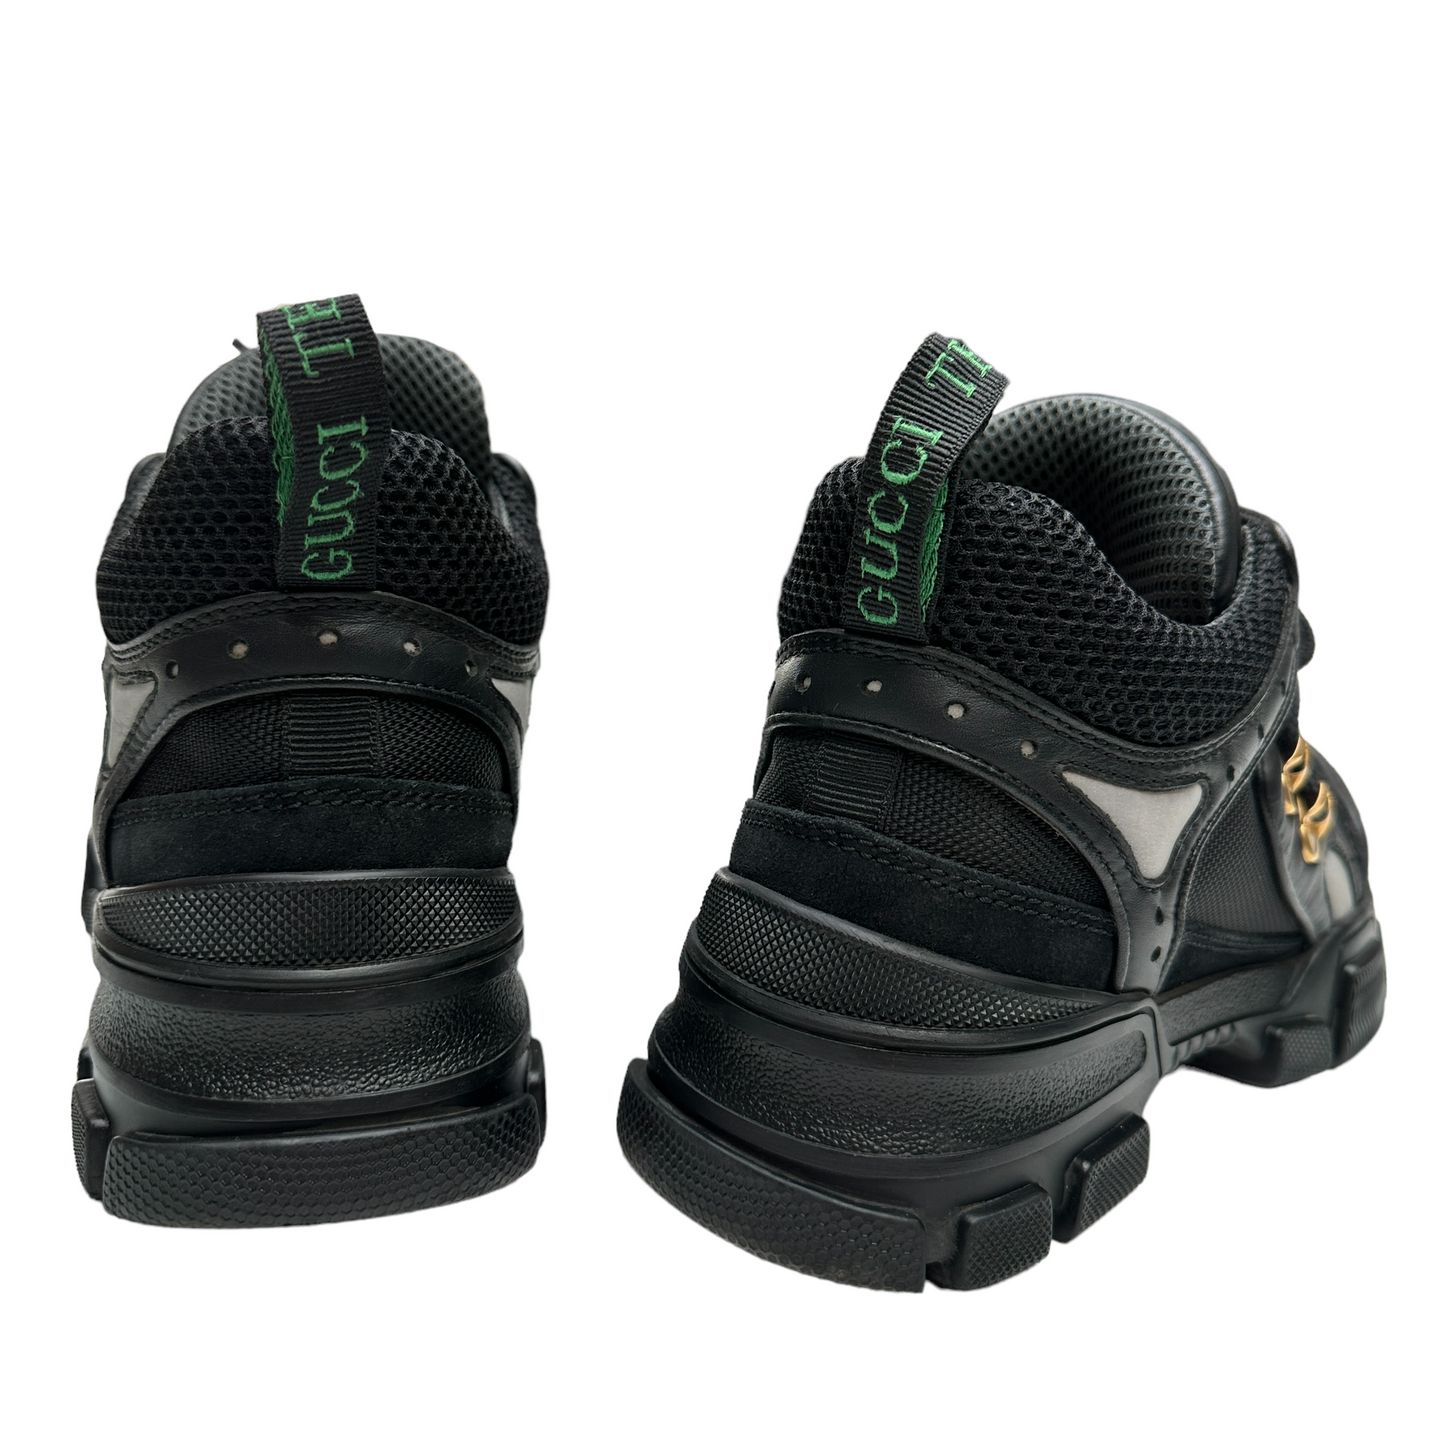 Flashtrek x SEGA Sneakers - 6.5